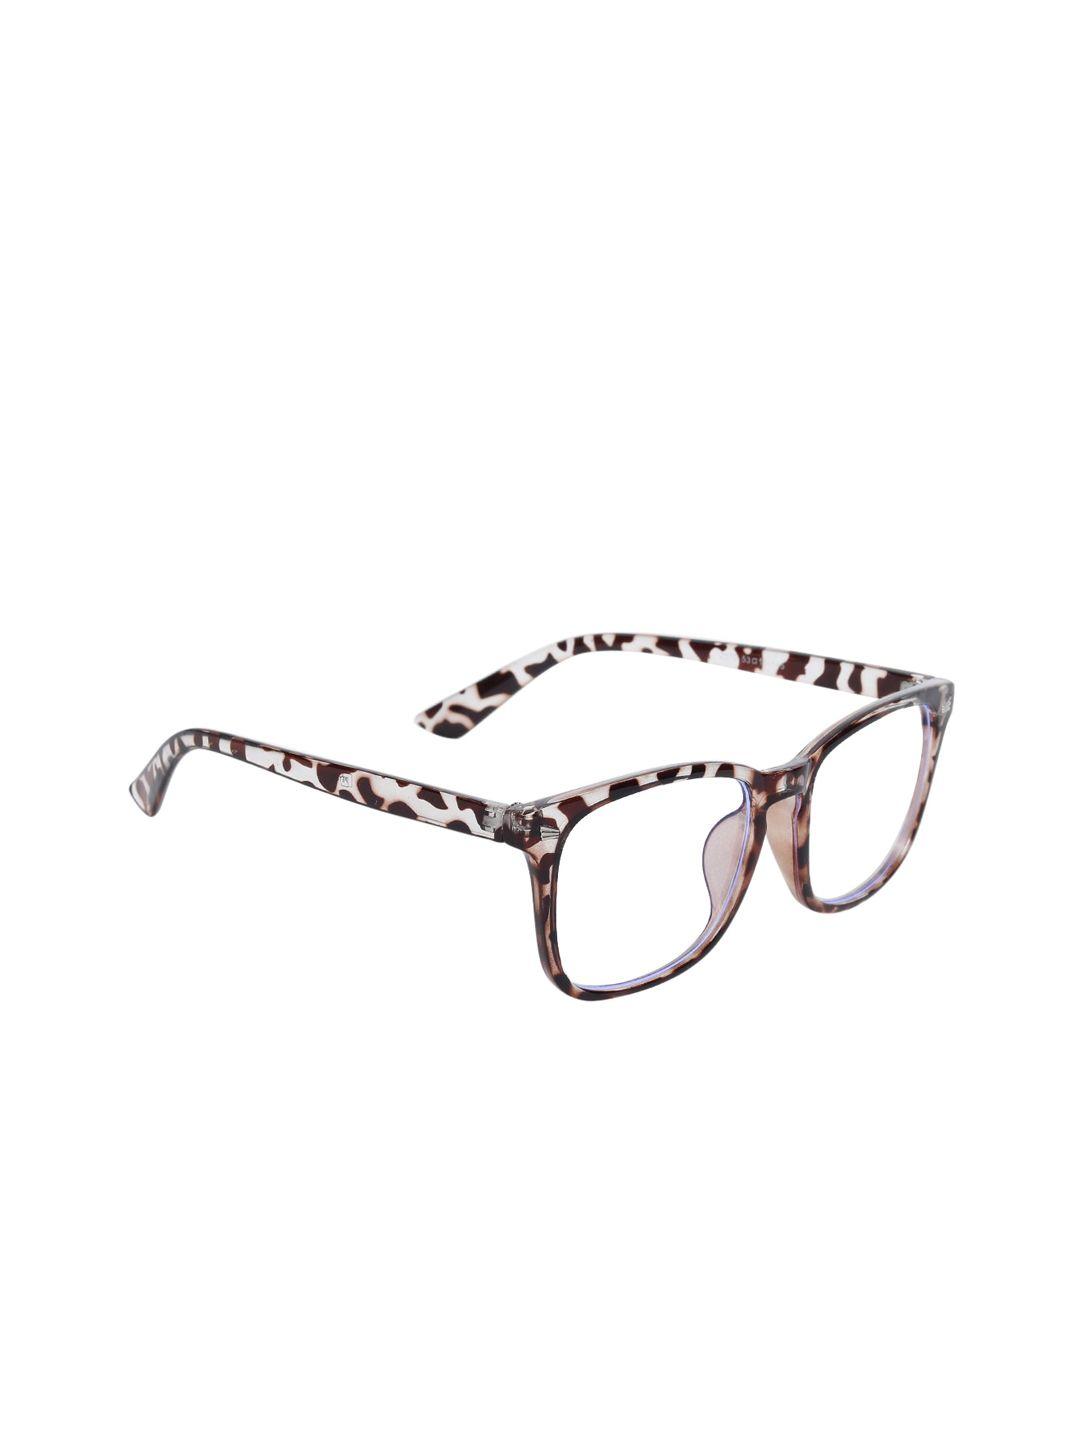 peter jones eyewear unisex grey & brown square blue light blocking full rim glasses 2379da